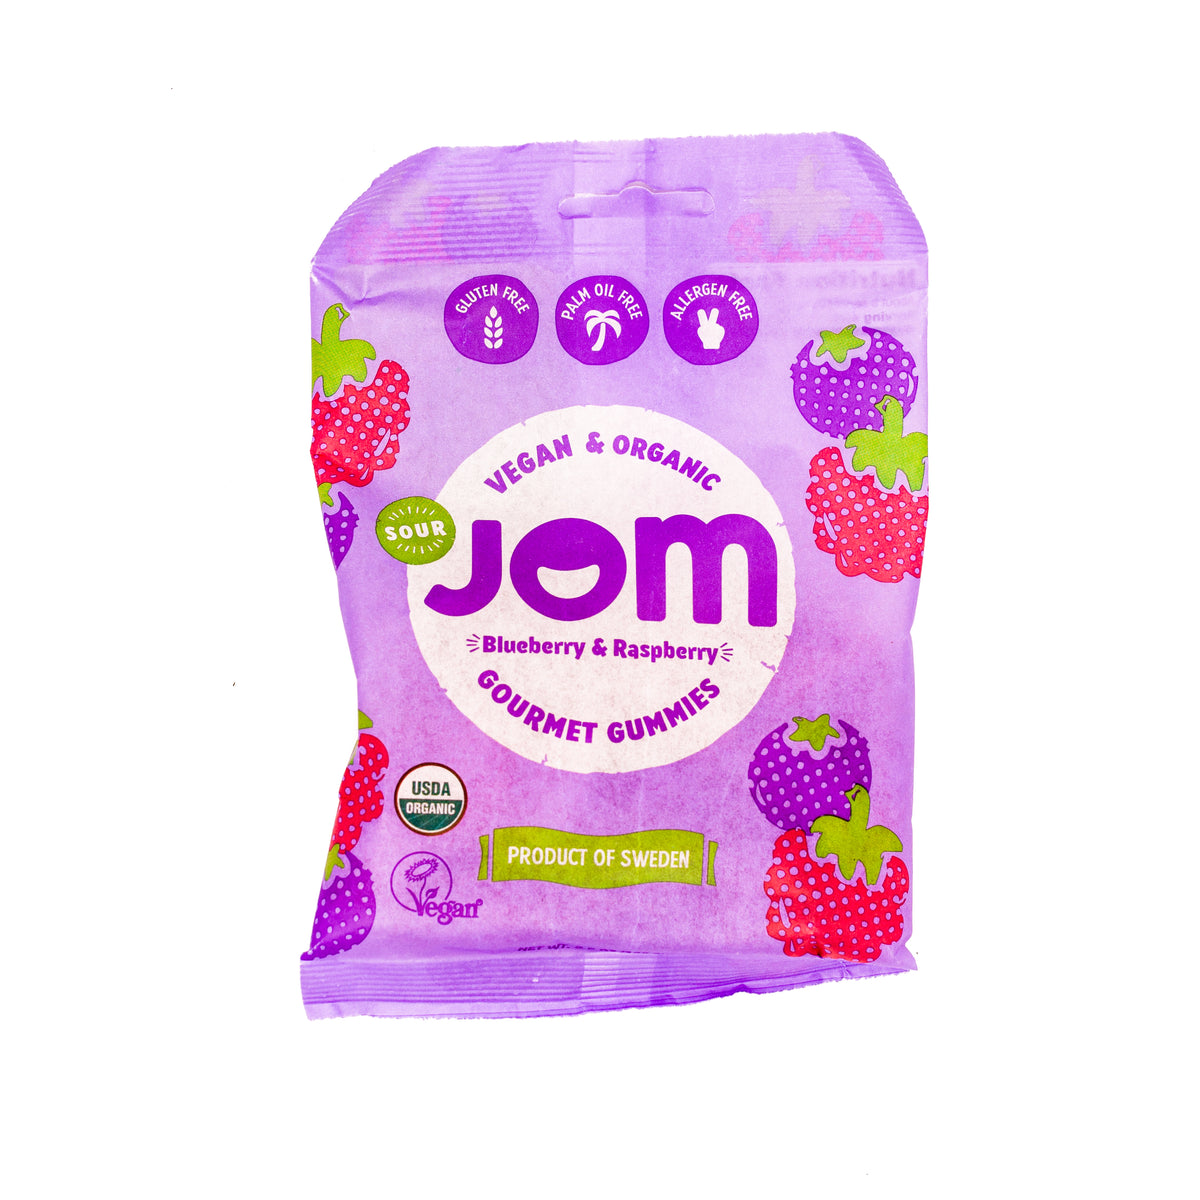 Jom Gummy Candy Sour Blueberry Raspberry